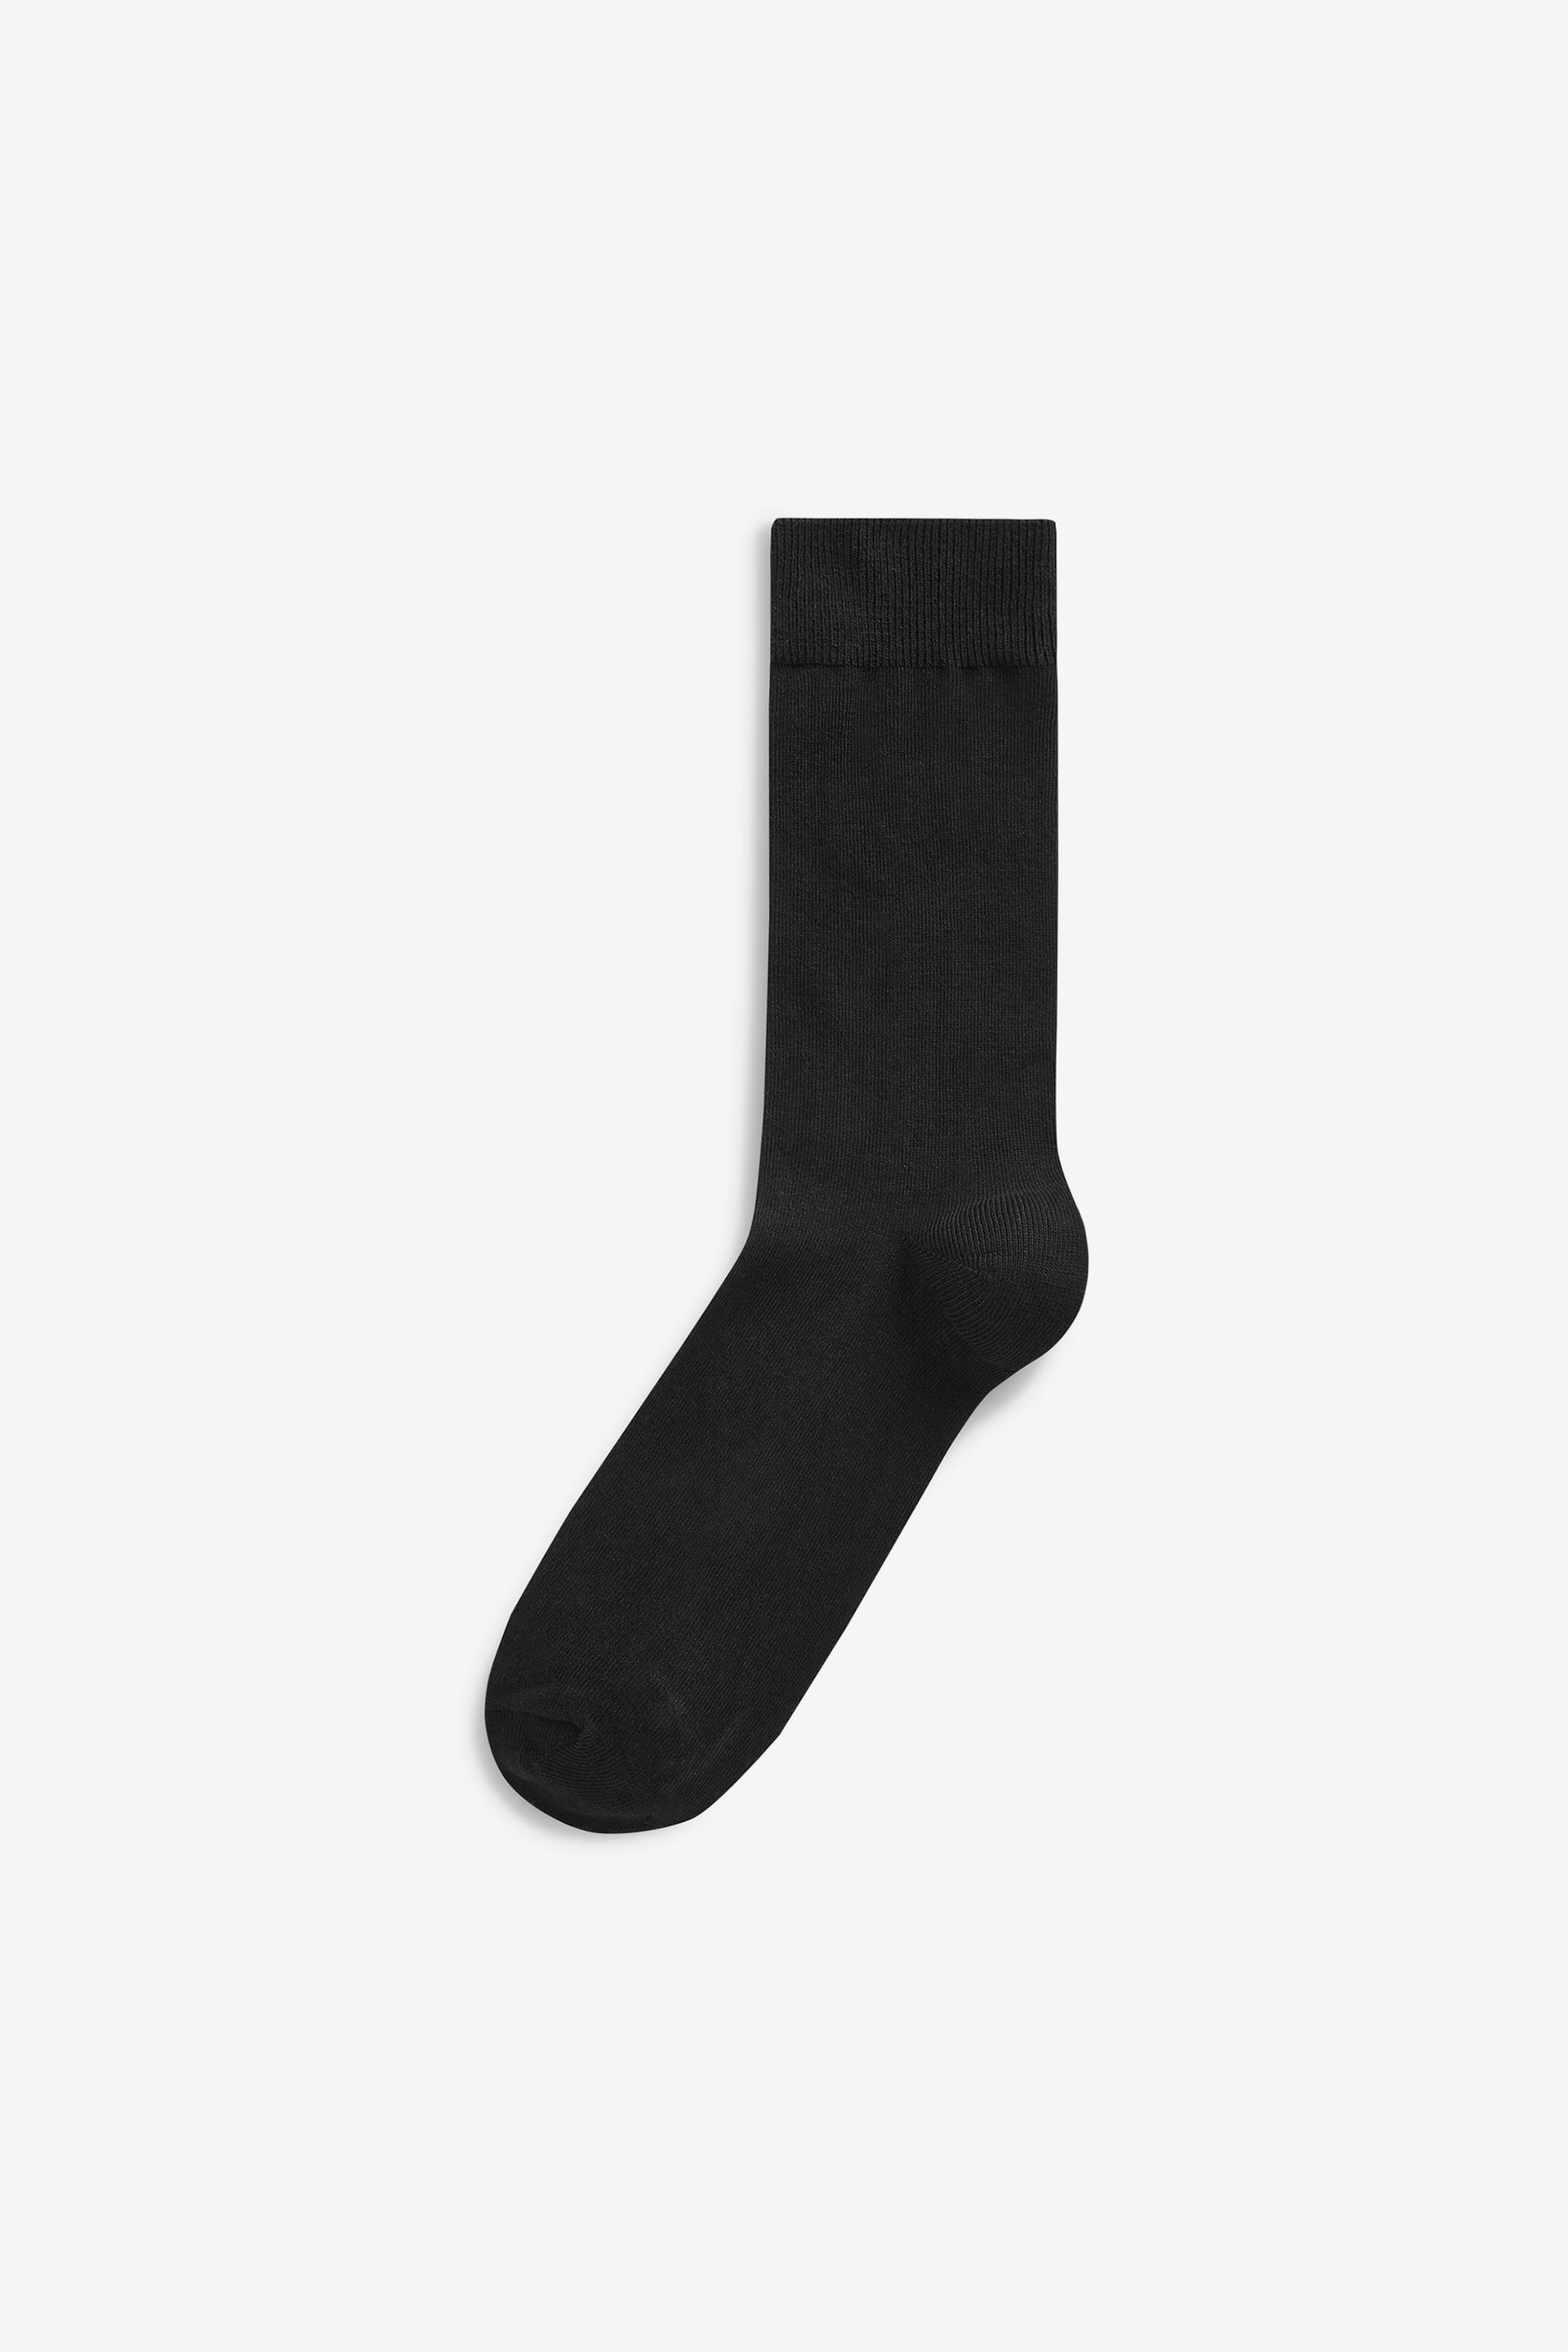 Black 18 Pack Mens Cotton Rich Socks - Image 2 of 2